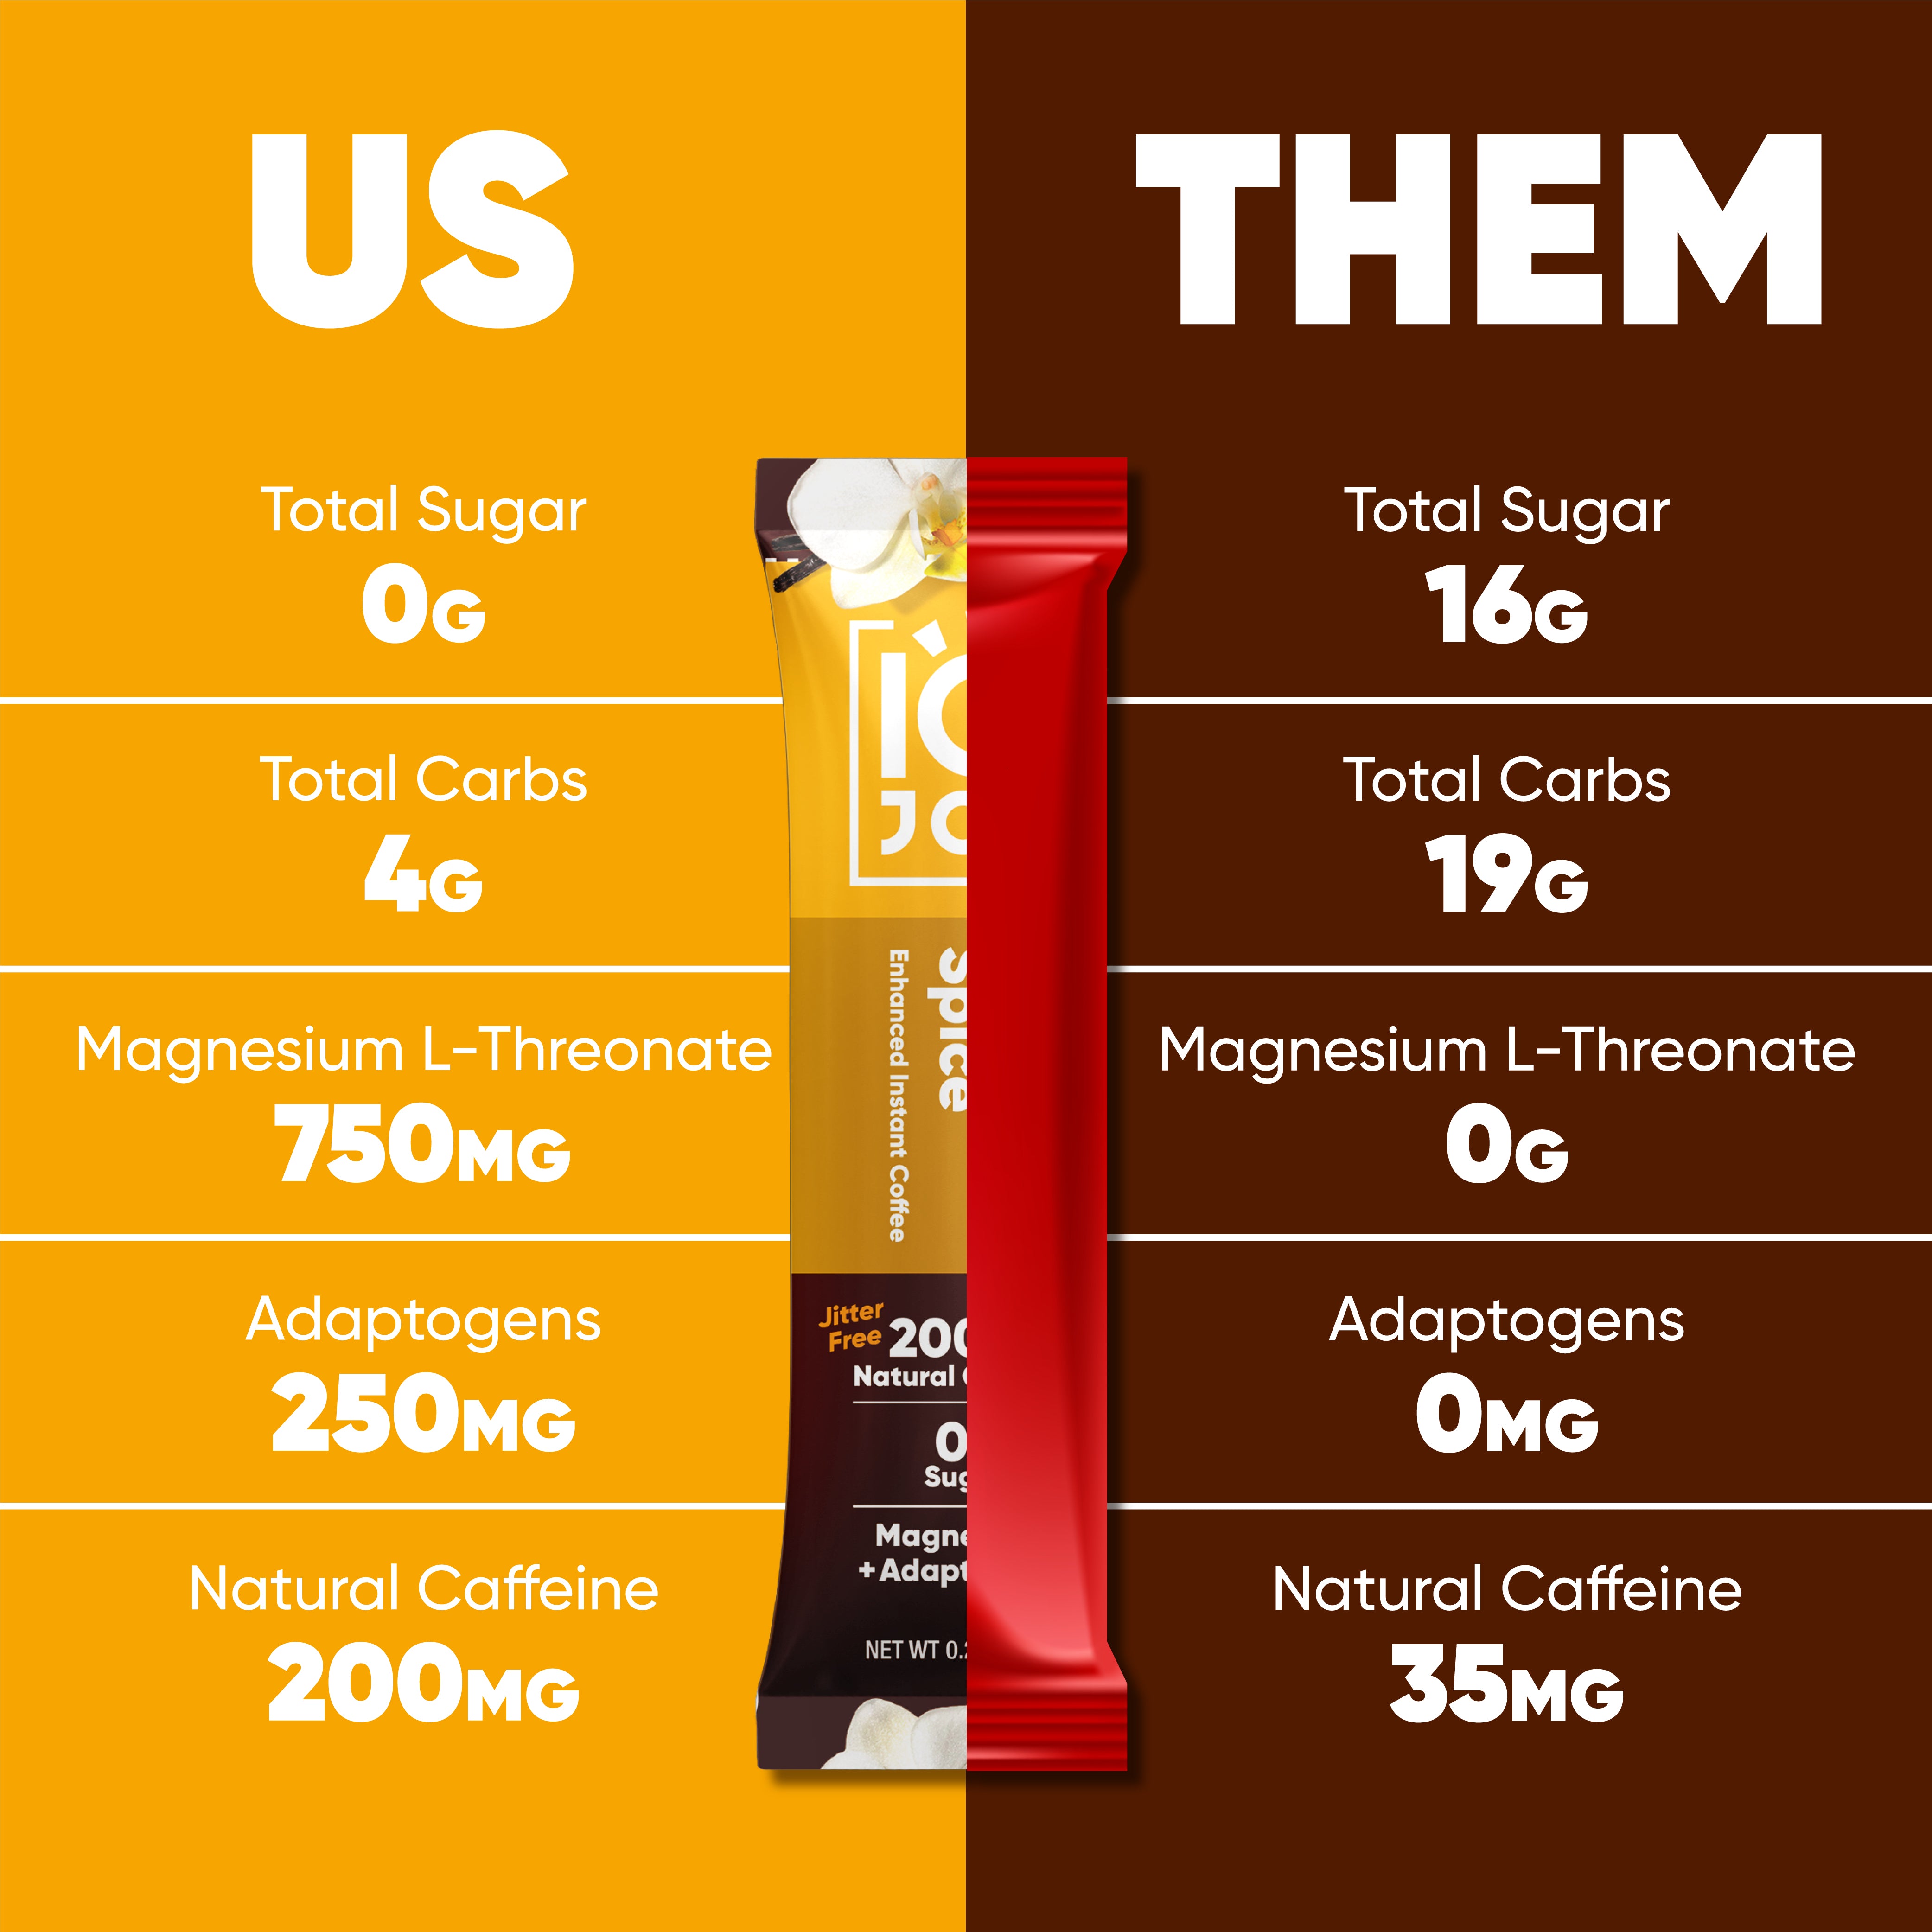 IQJOE Vanilla Spice is the Best Mushroom Coffee. 0G Sugar, 4G Carbs, 750mg Magesium L-Threonate, 250mg Adaptogens, 200mg of Caffeine.